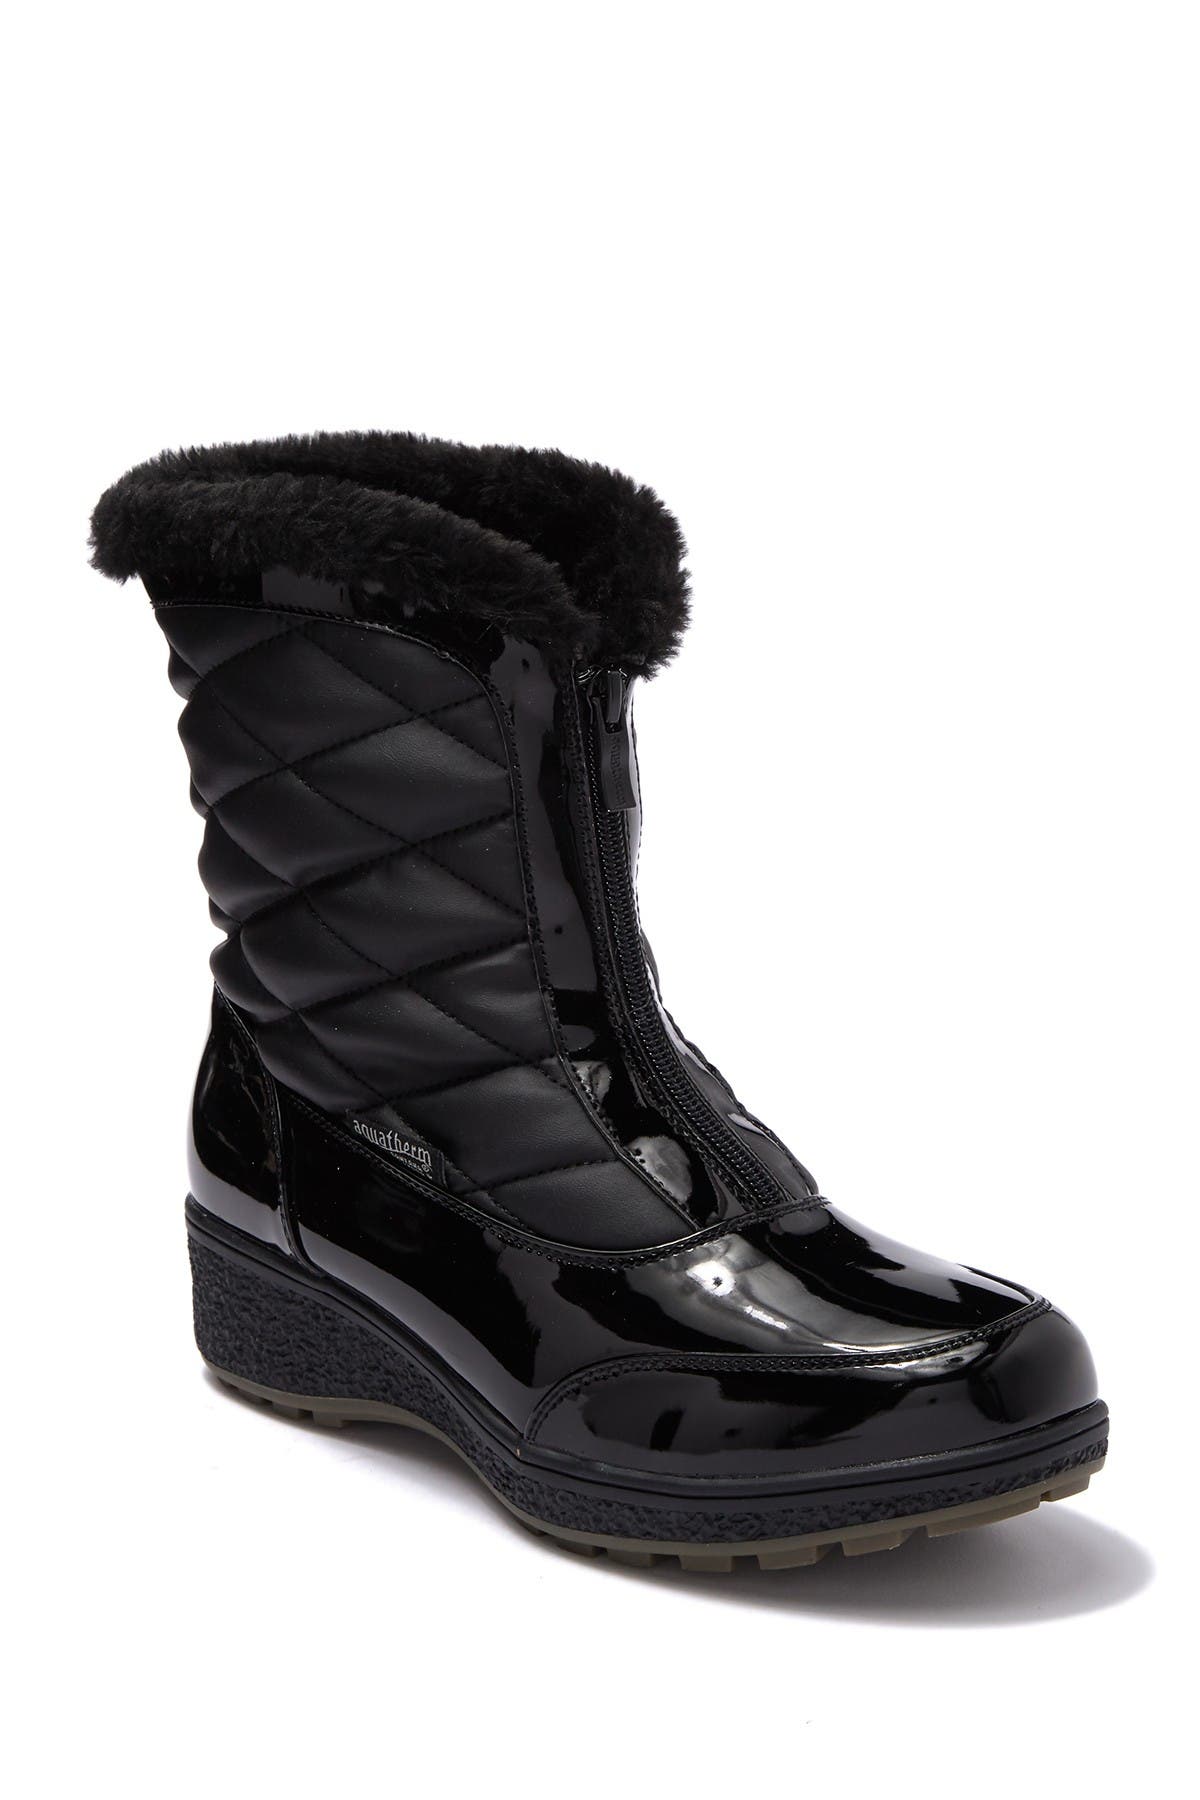 aquatherm by santana canada waterproof faux fur lined boots